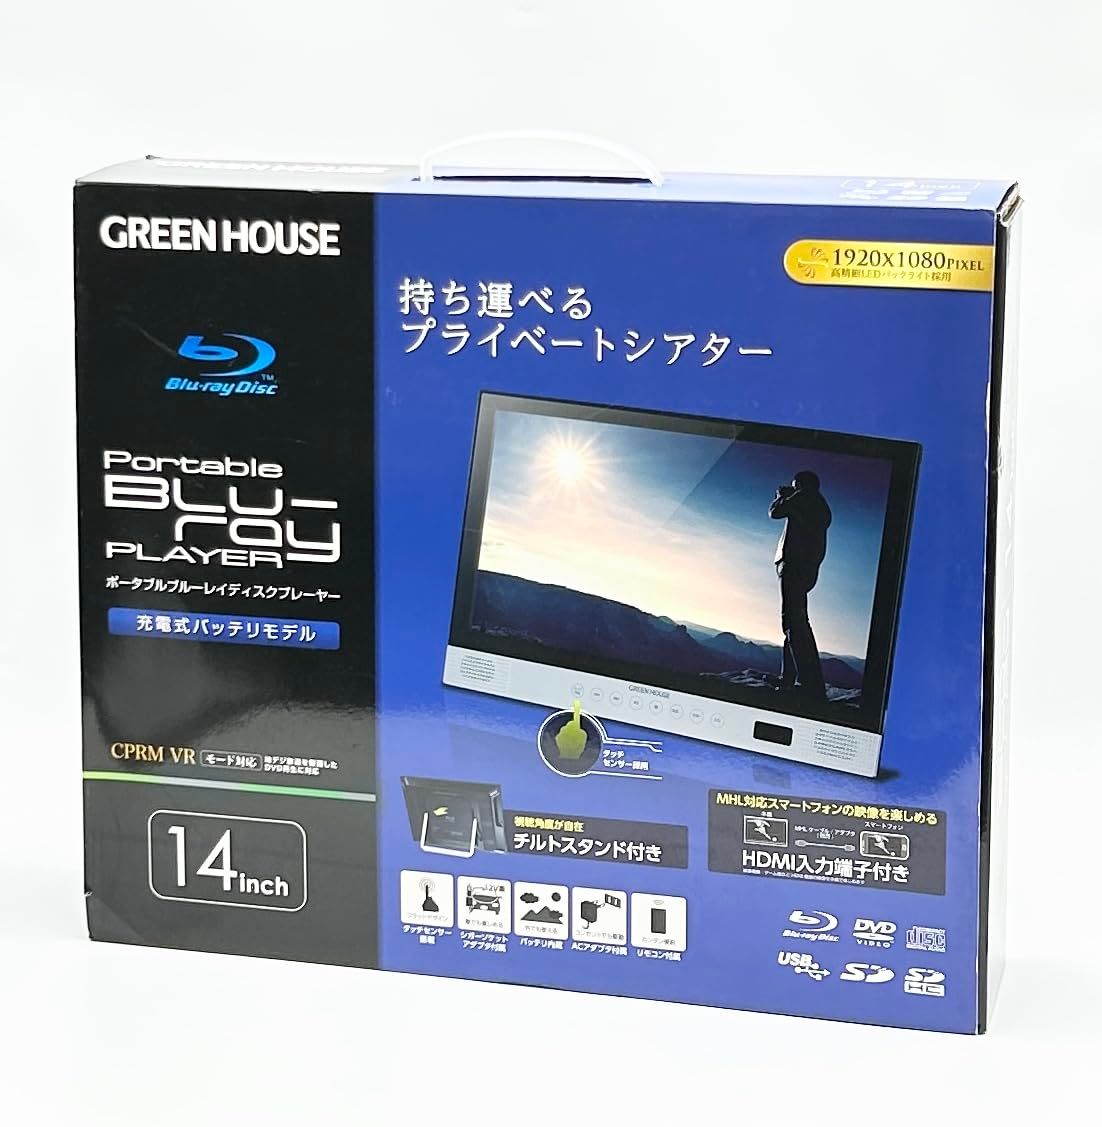 GREEN HOUSE ポータブル ブルーレイディスクプレーヤー - テレビ/映像機器